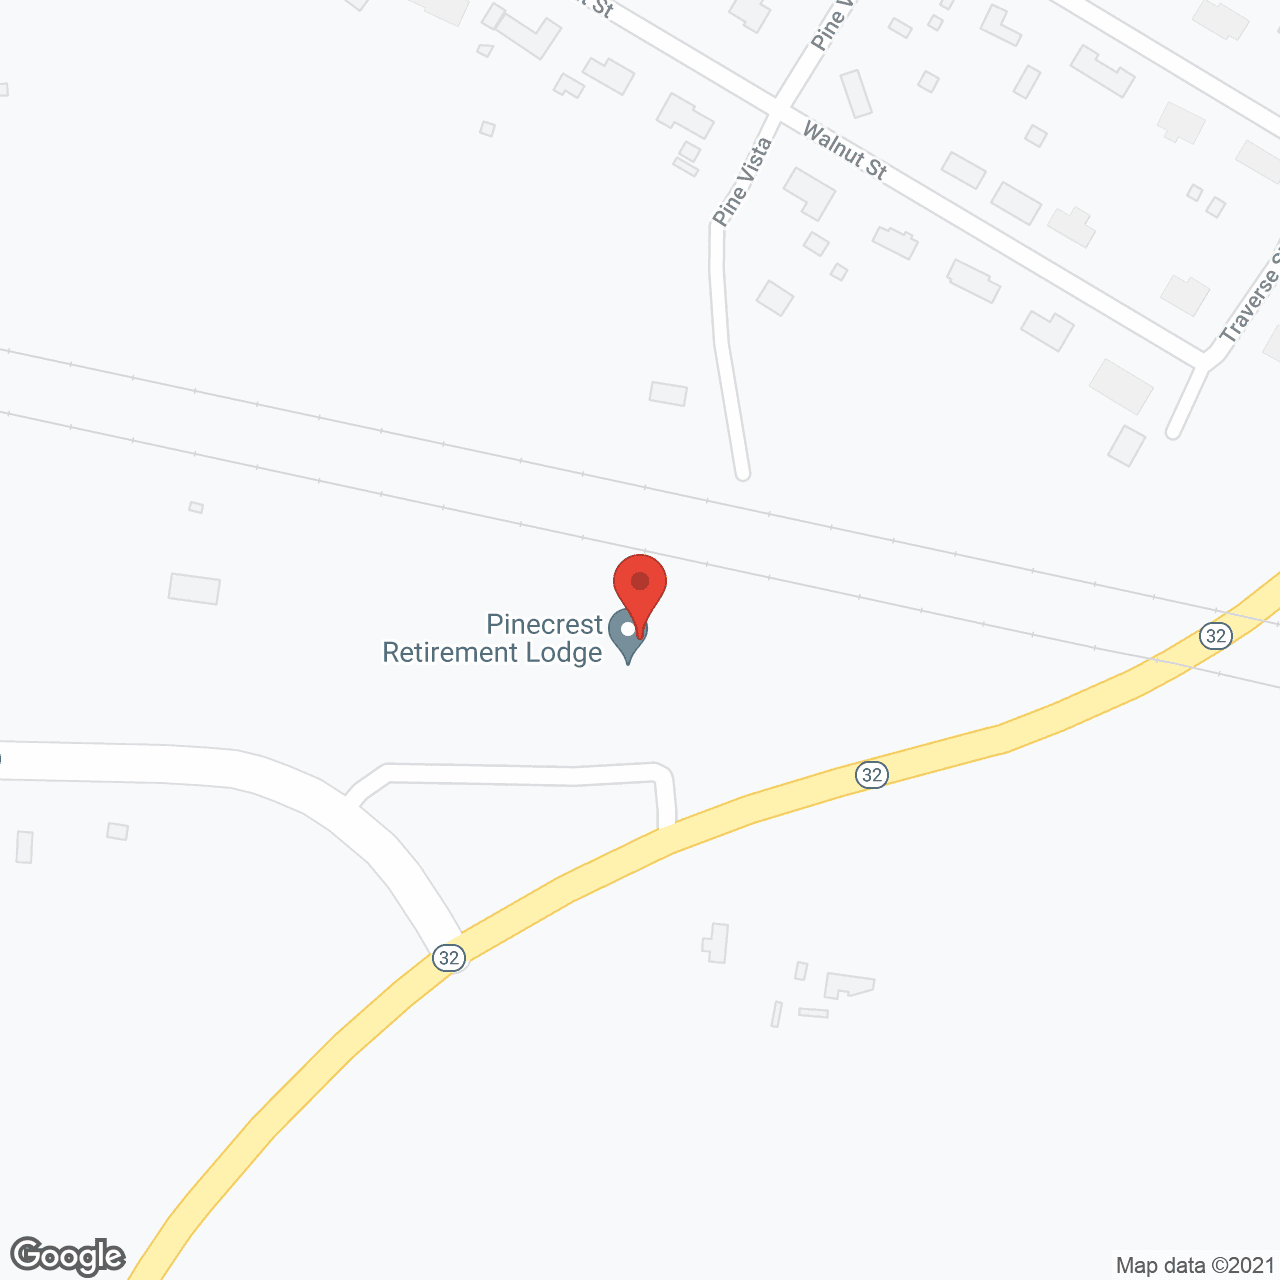 Pinecrest Retirement Lodge in google map